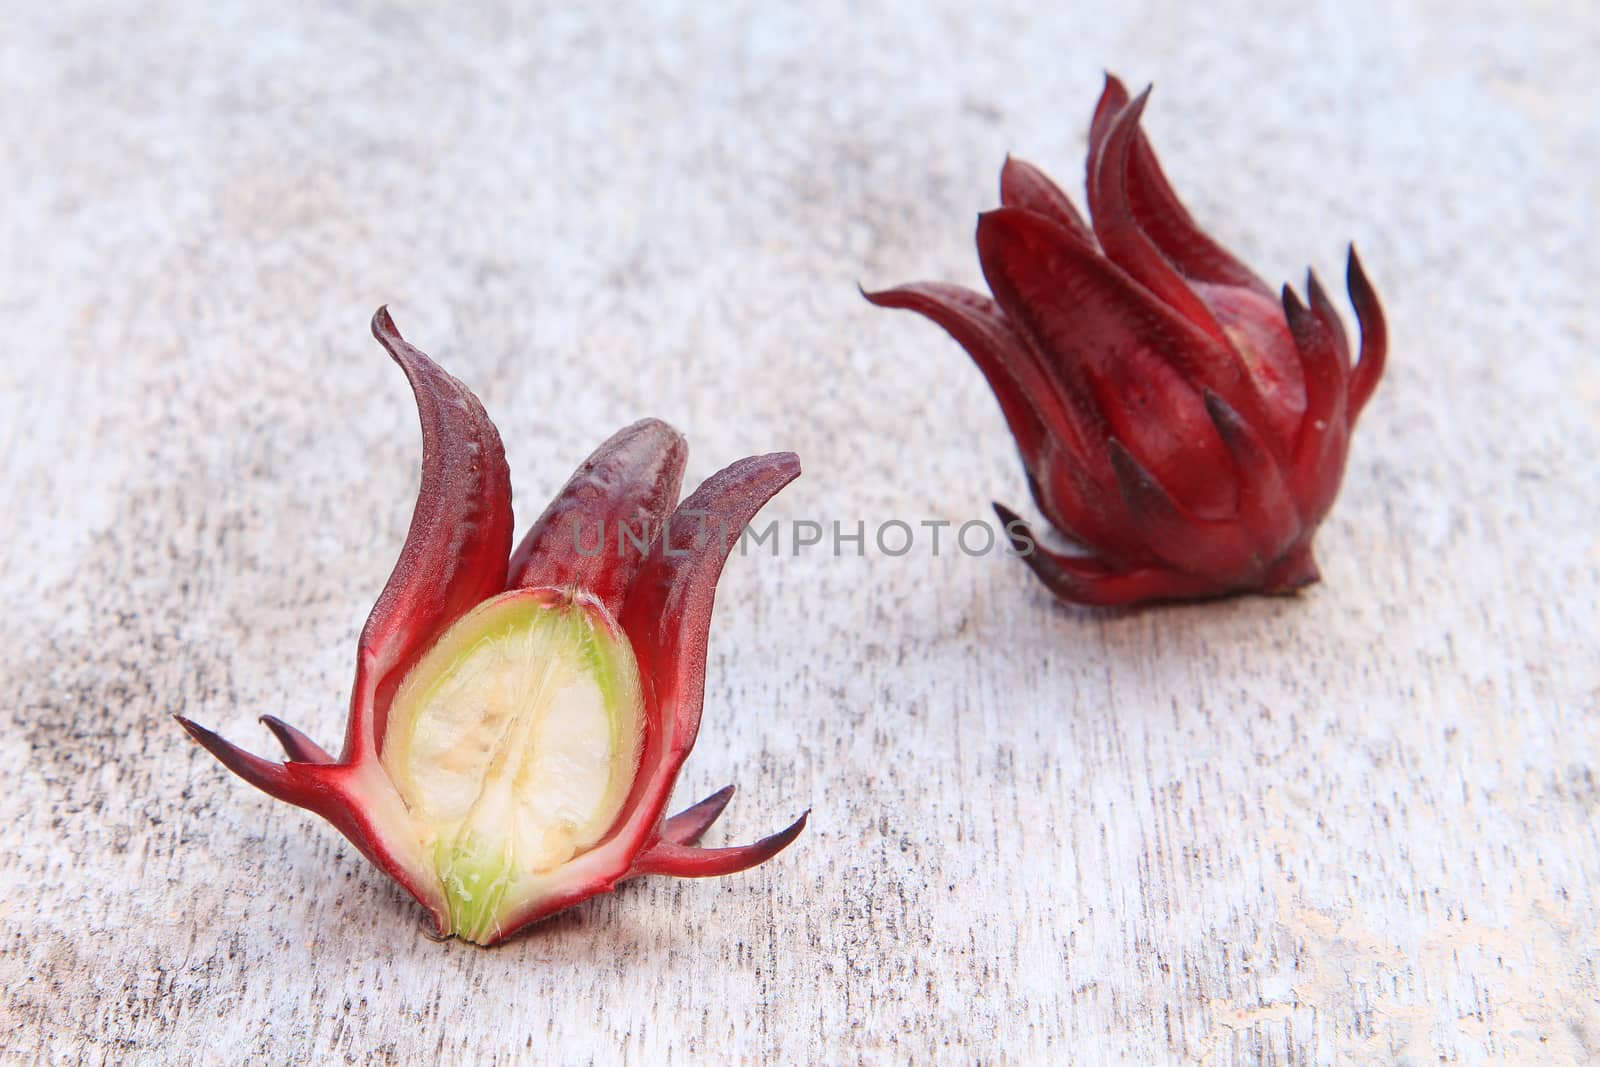 Hibiscus sabdariffa or roselle fruits by foto76